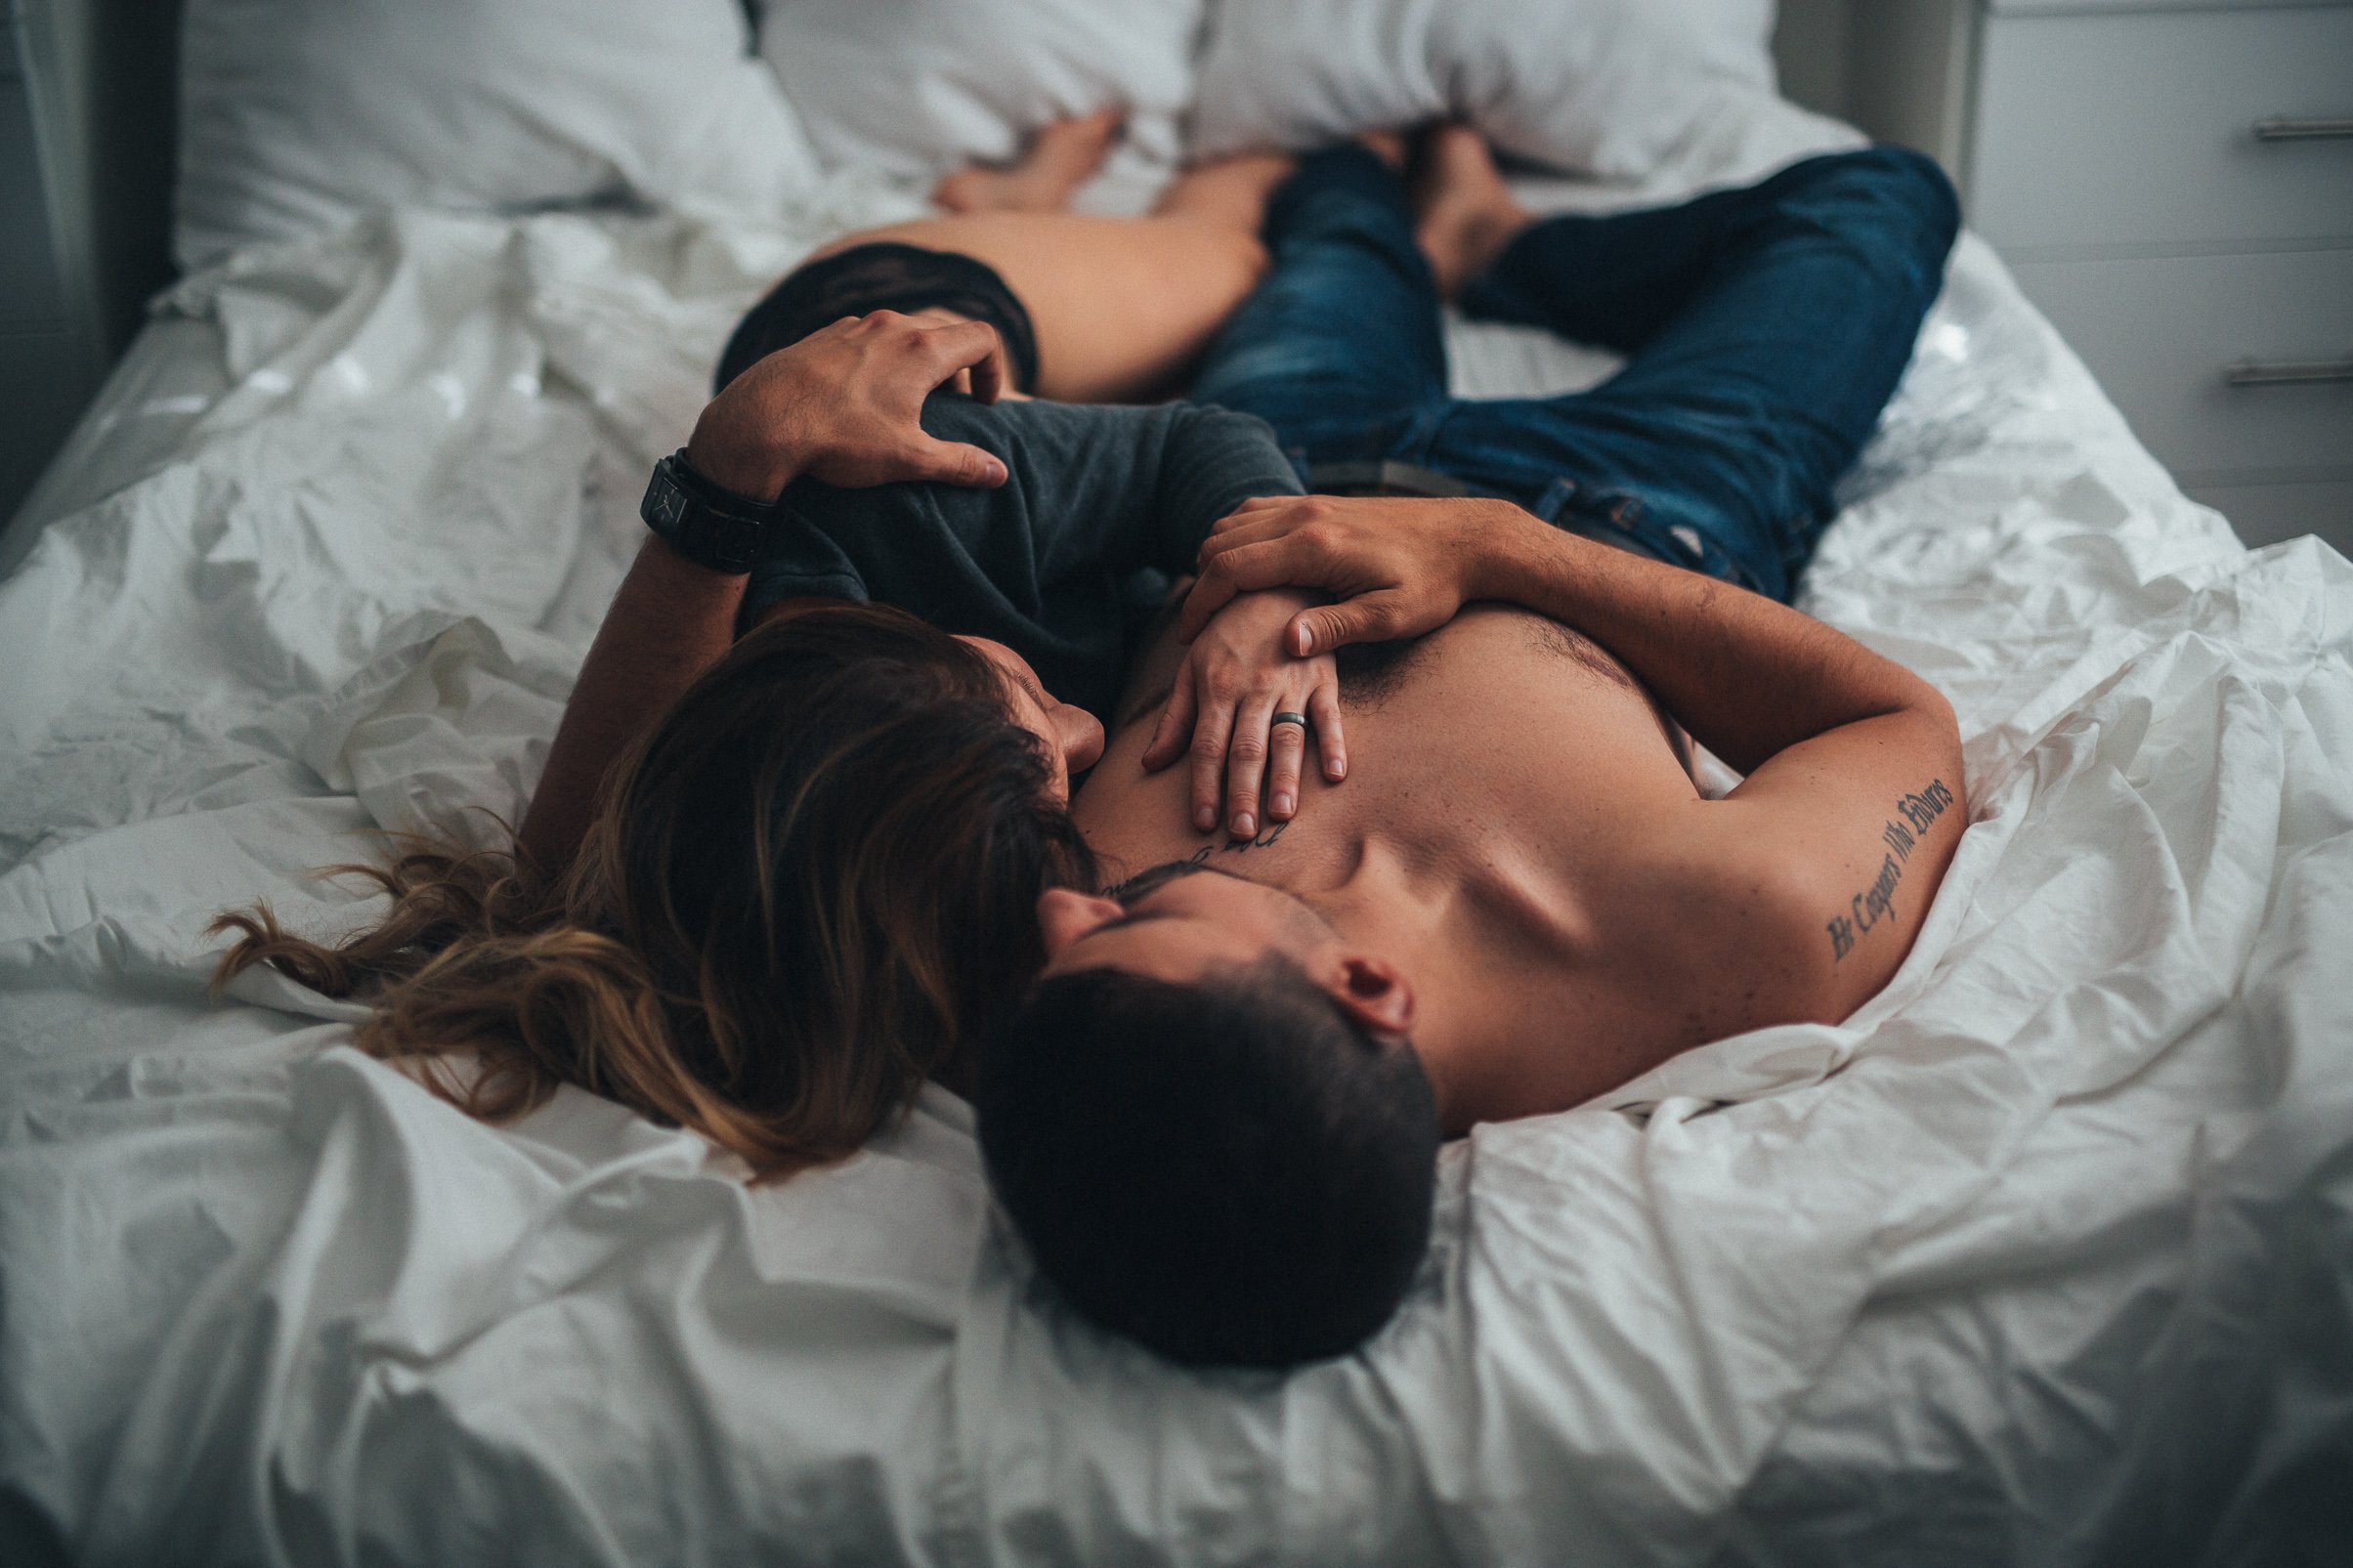 Любовники сняли на видео романтический интим в постели в вечернее время